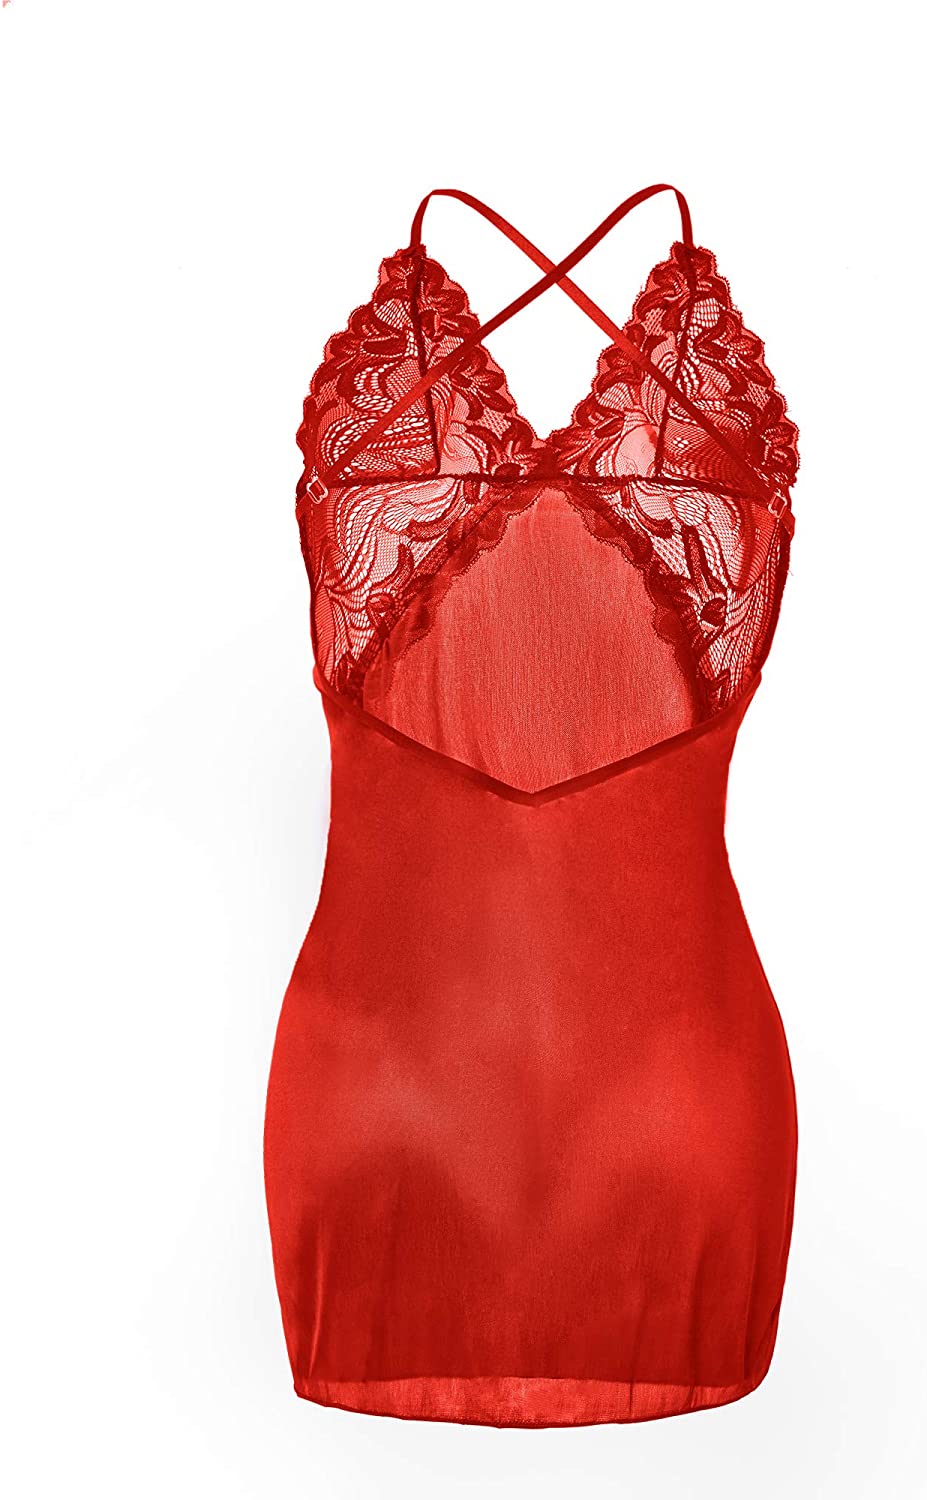 Avlovelace Lingerie For Women V Neck Nightwear Satin Sexy Red Size Xx Large Qk Ebay